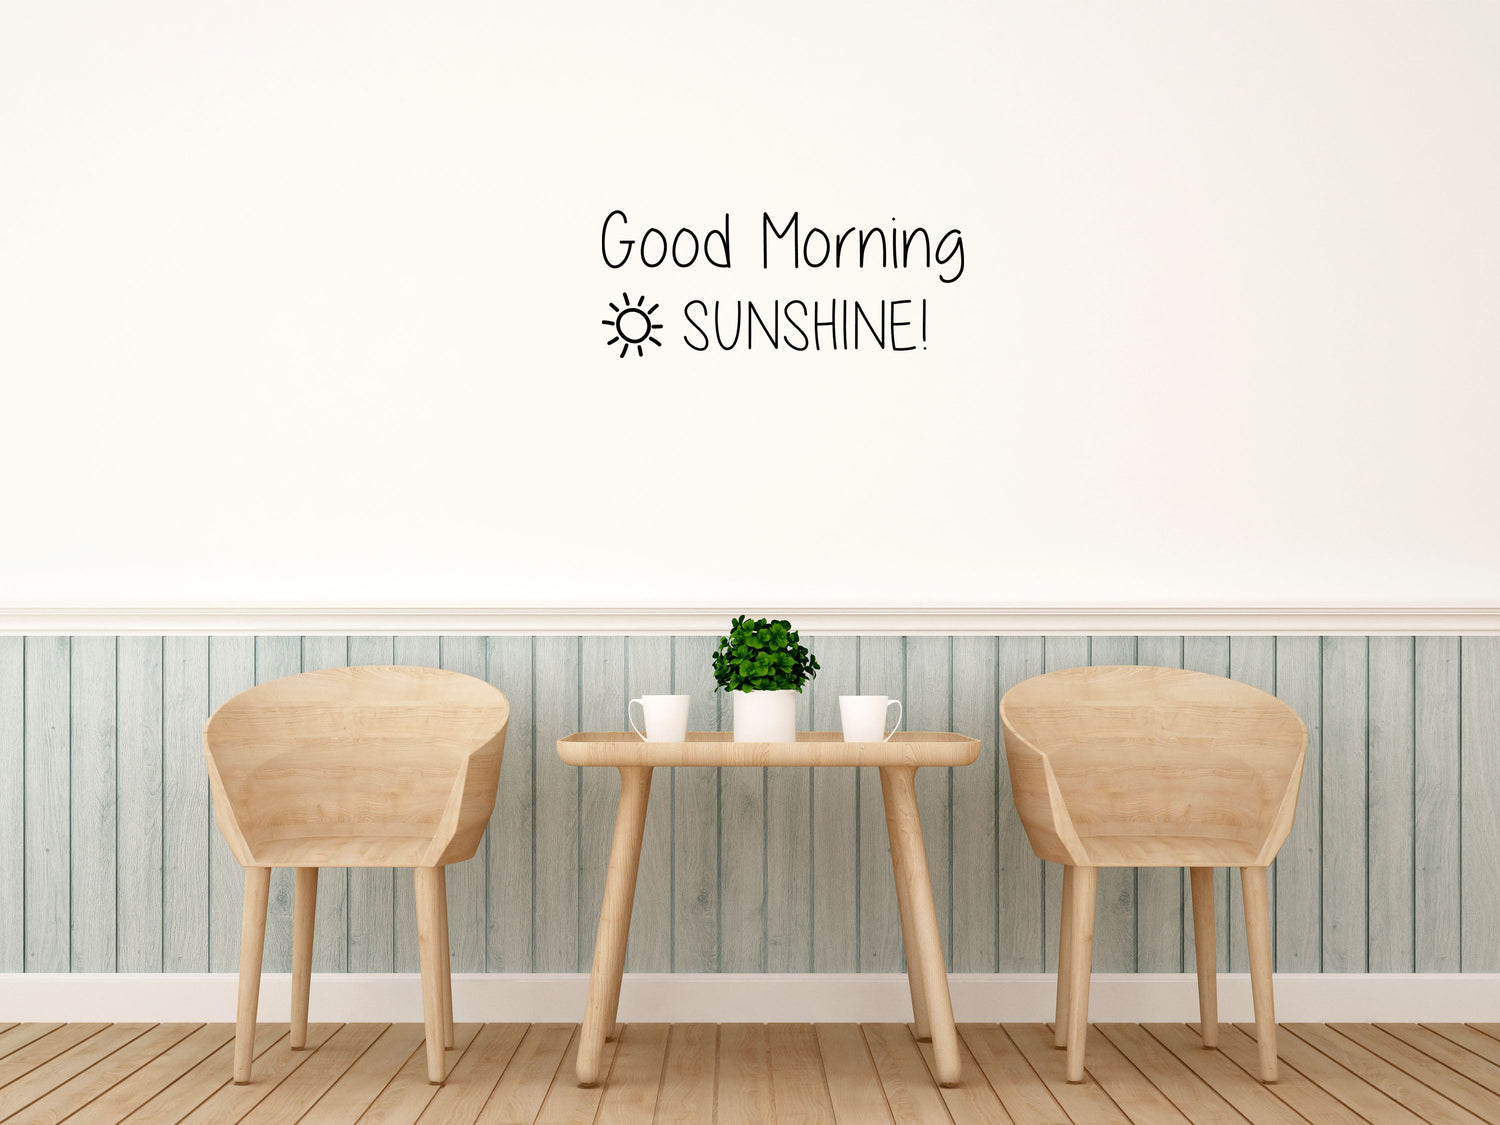 Good Morning Sunshine Vinyl Wall Decal Vinyl Wall Decal Inspirational Wall Signs 